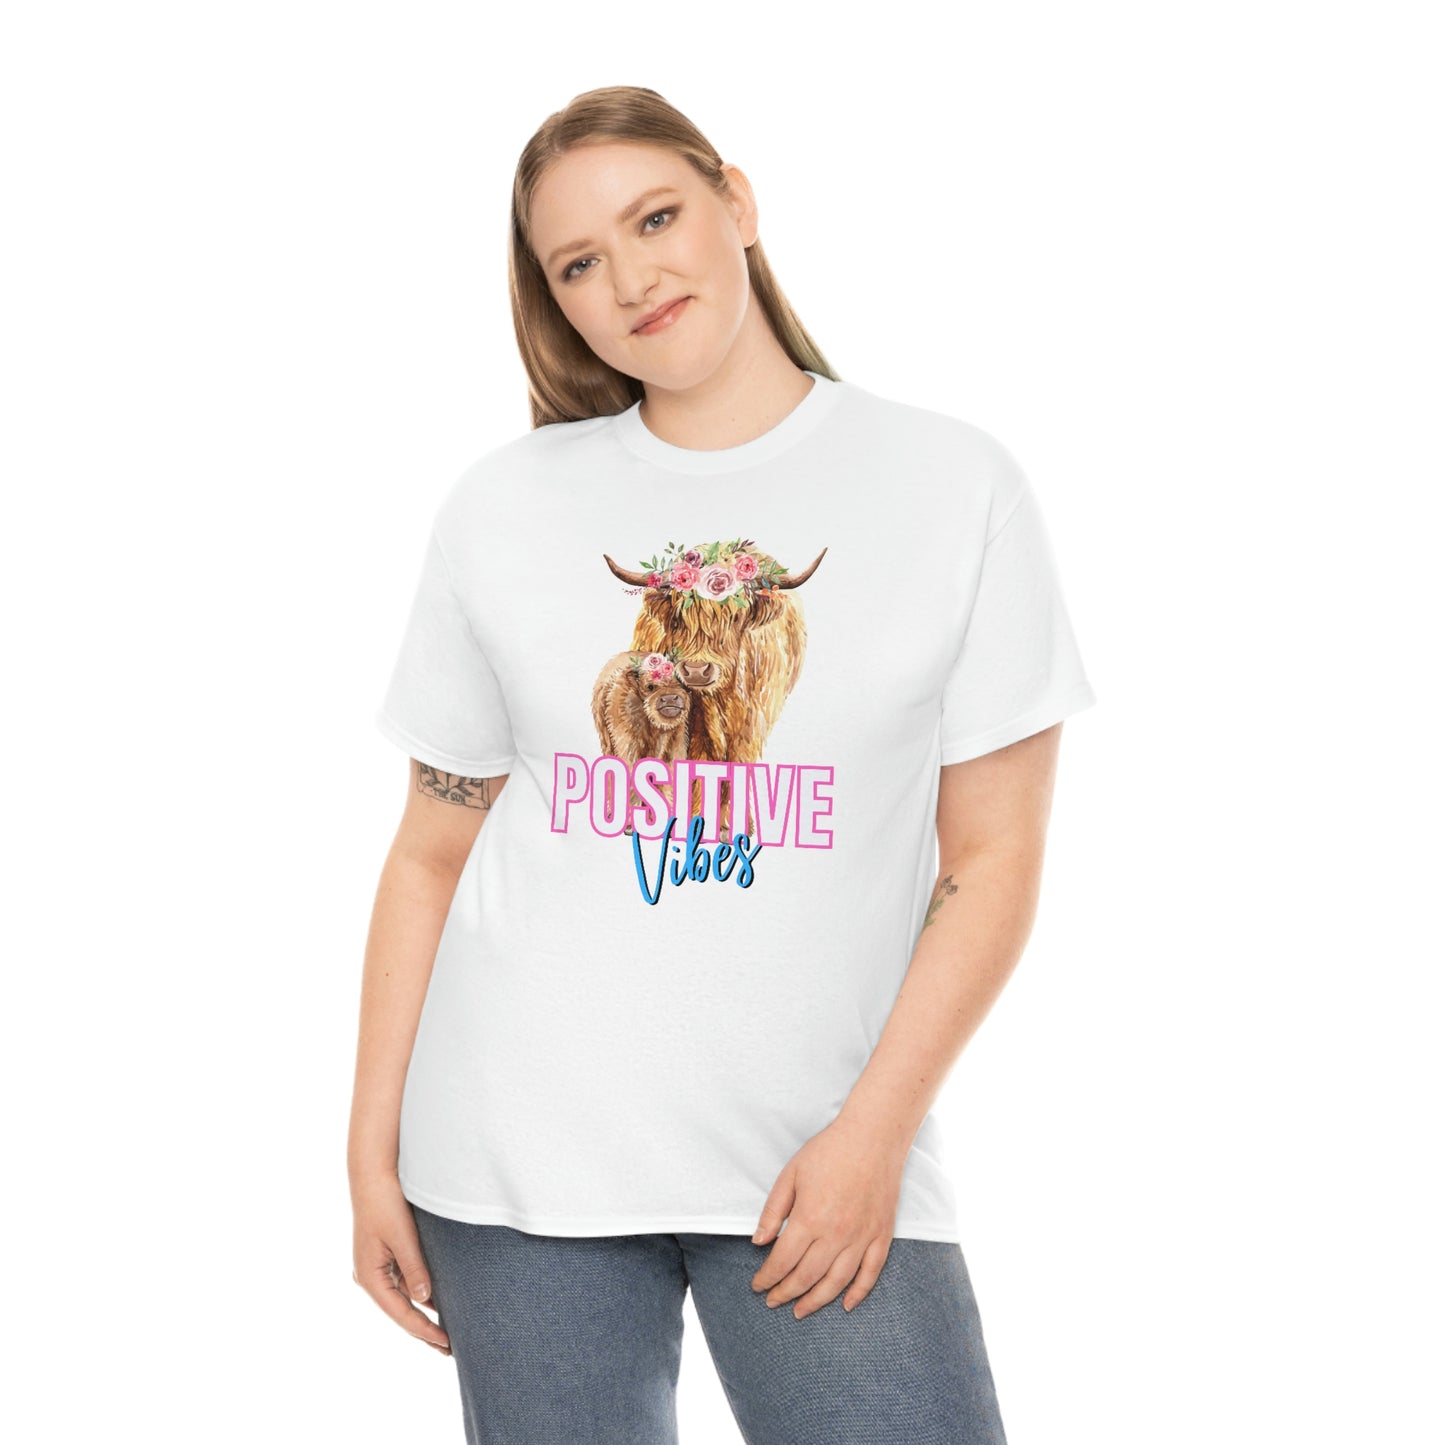 " Positive Vibes " Cow/ Fam Animal Graphic tee shirt